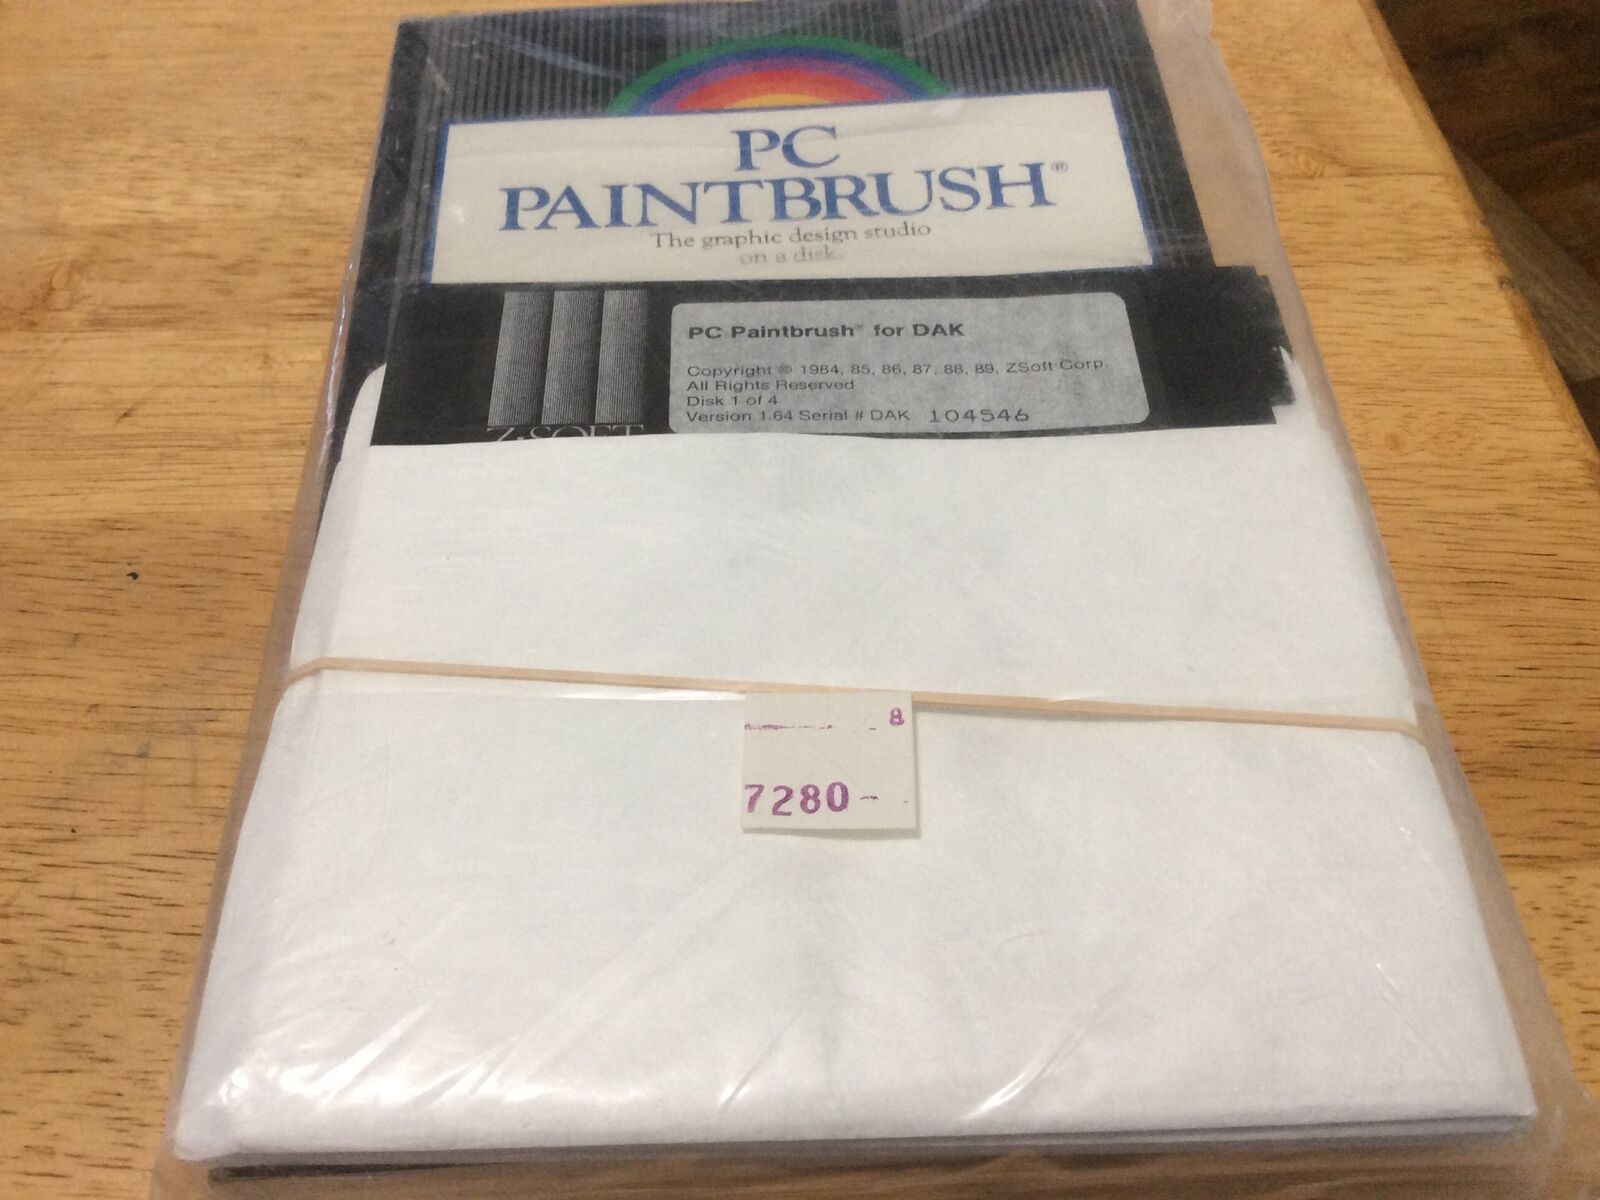 Microsoft Paint Brush Vintage PC Disks Software 5.25 Floppy disks Sealed